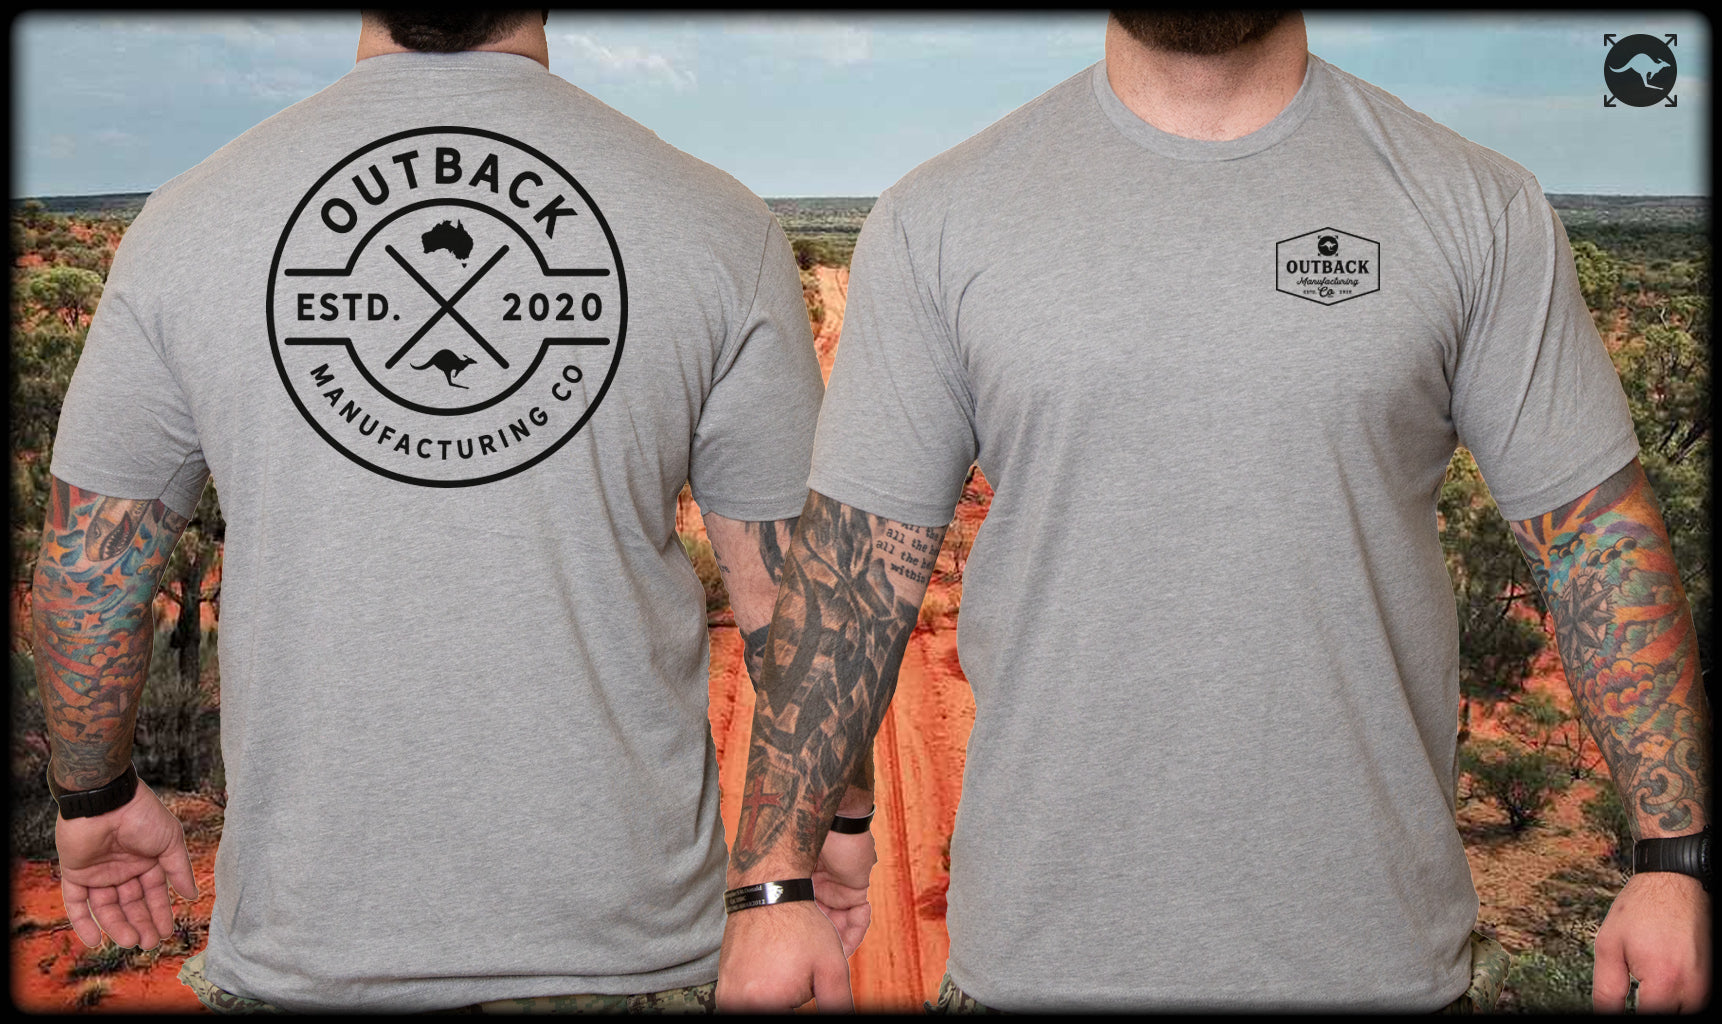 Outback MFG Union Shirt